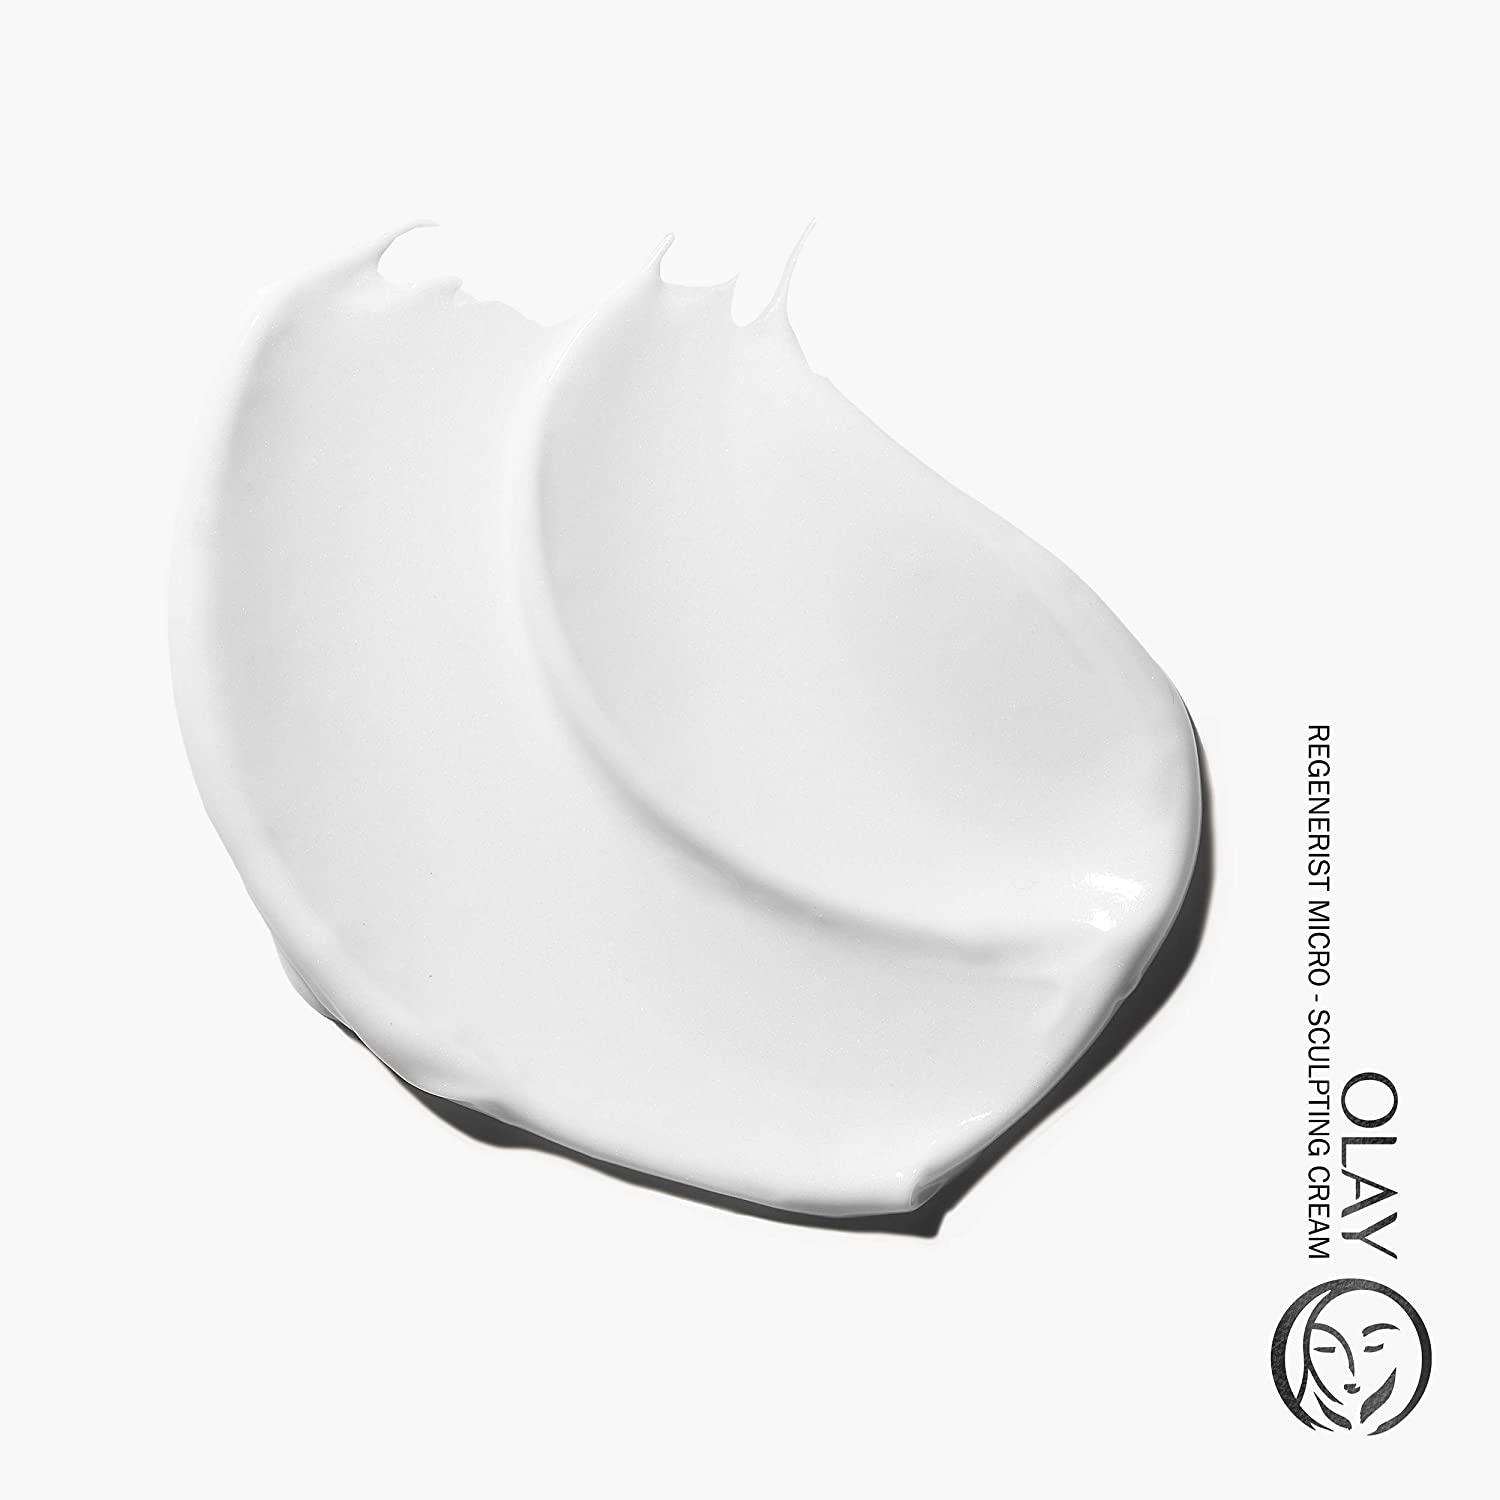 Olay Regenerist Micro-Sculpting Cream Face Moisturizer, 1.7 oz